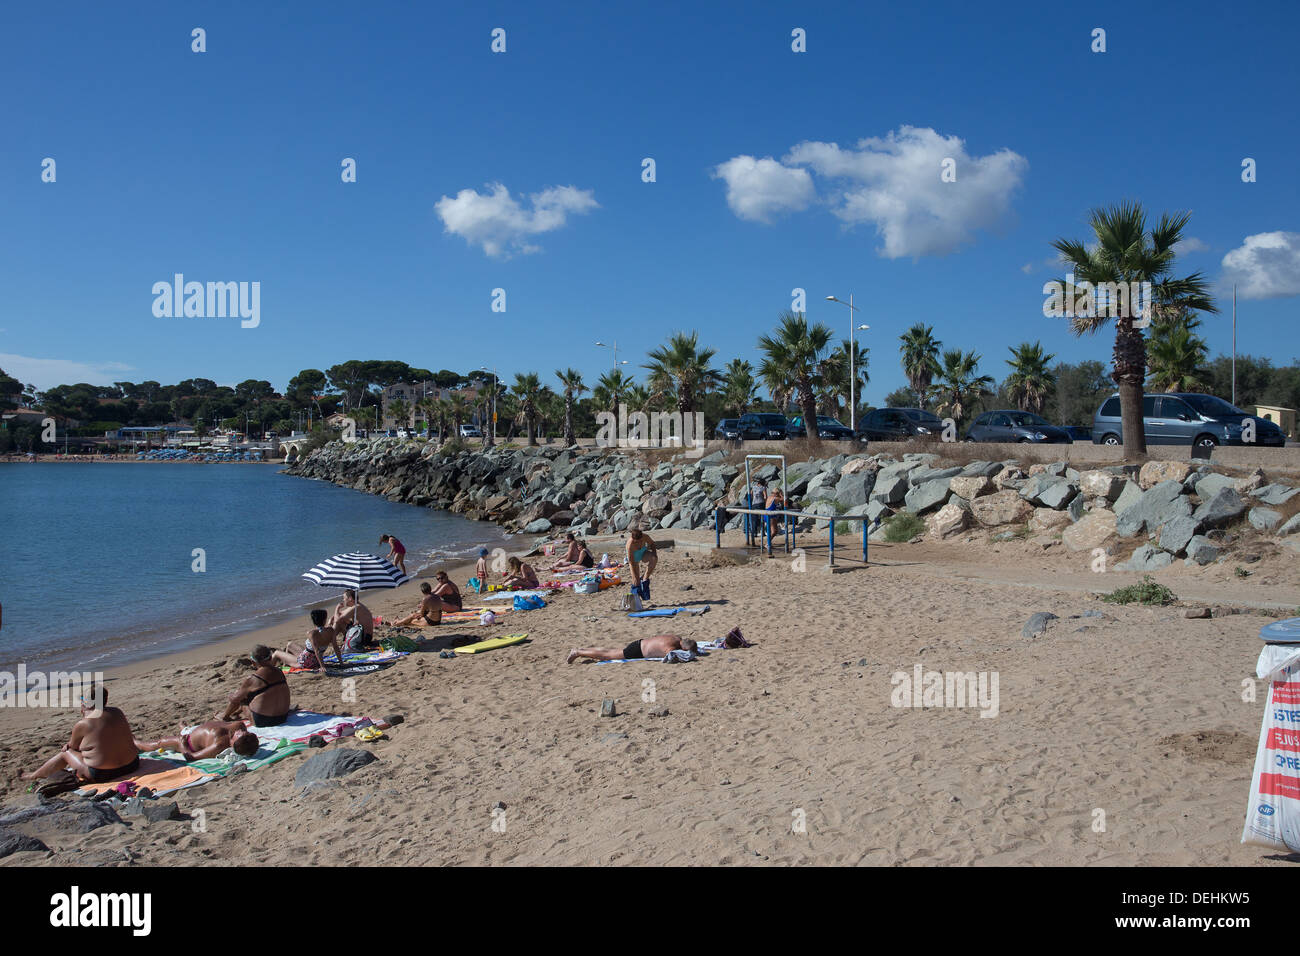 Frejus Cote d'Azur French Riviera France beach Stock Photo - Alamy